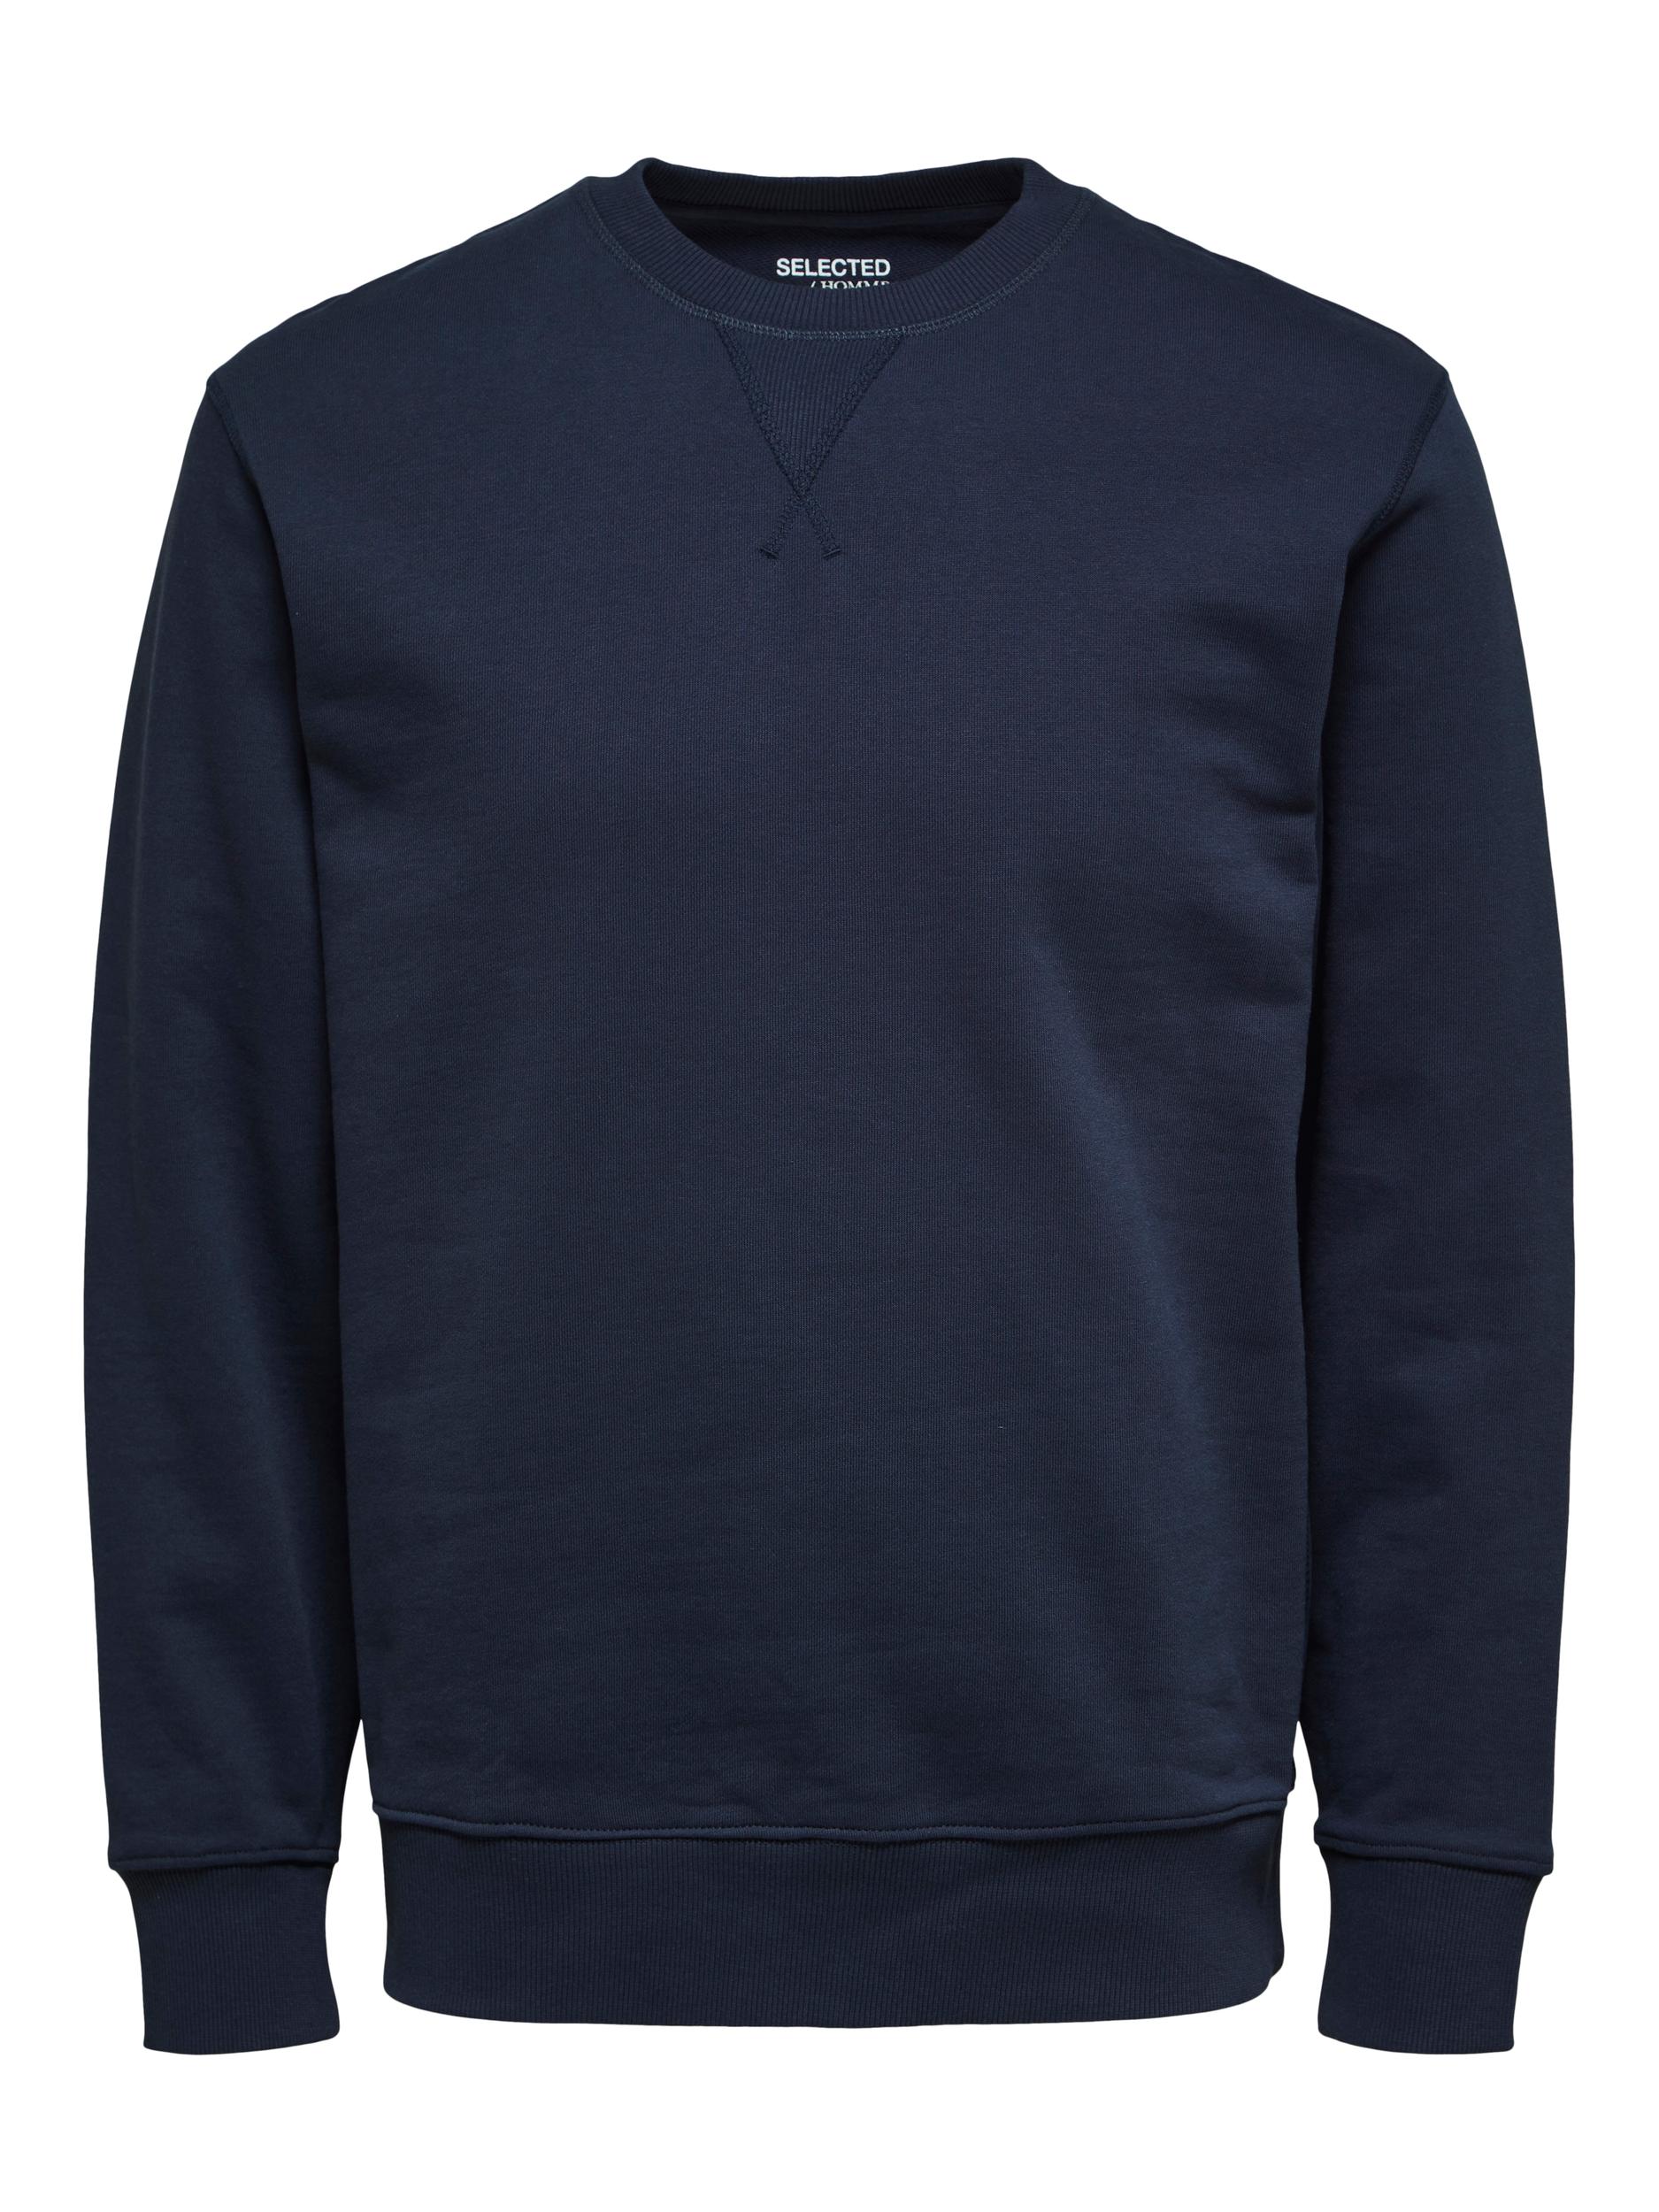 Selected Homme Jason Crew Neck sweatshirt, Navy Blazer, L